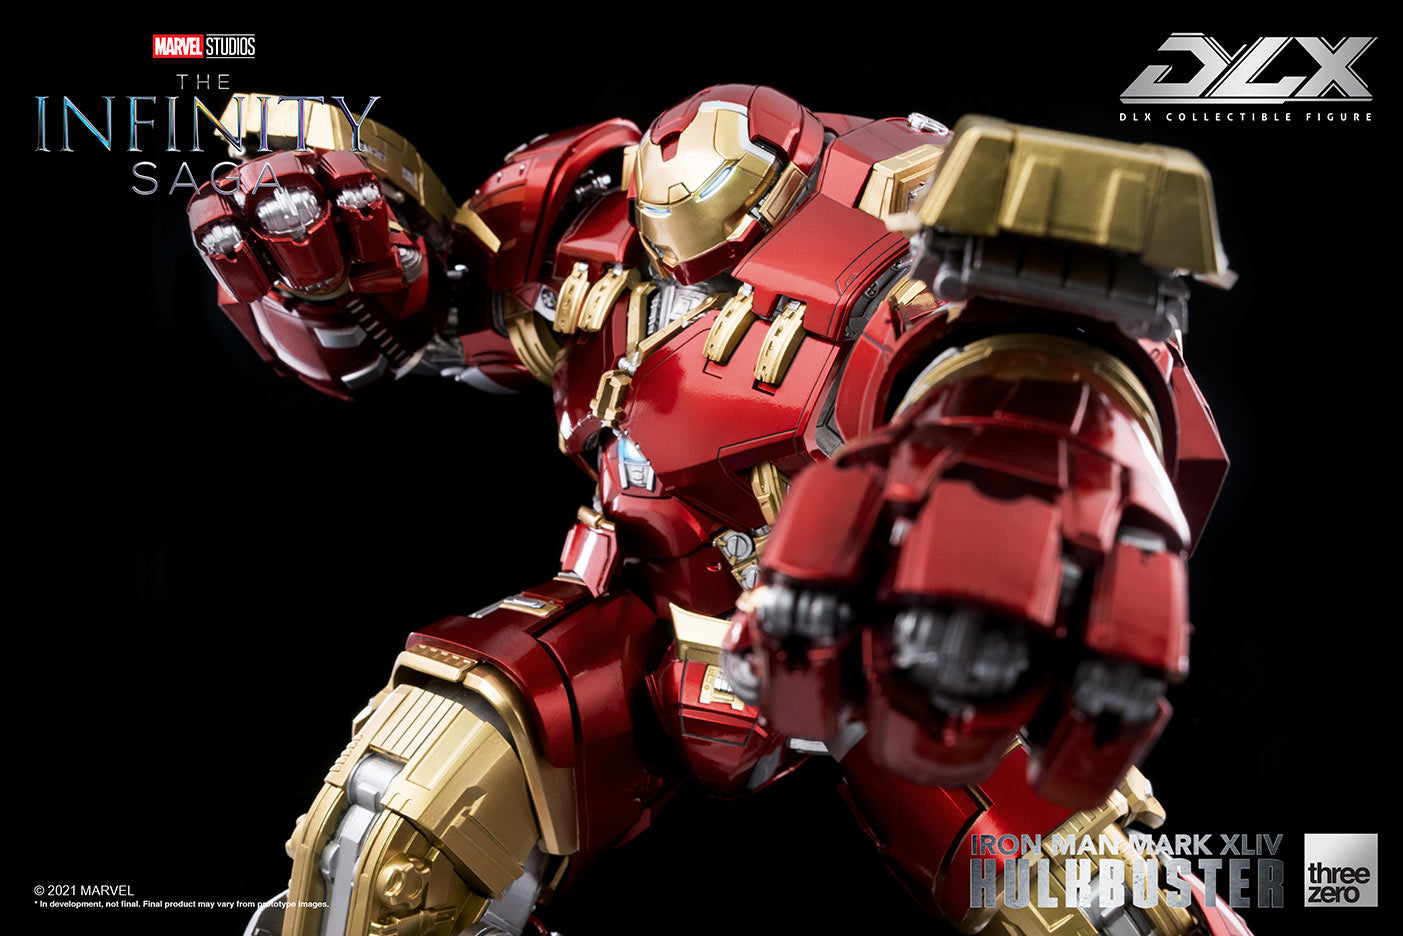 threezero - DLX Scale - Avengers: Infinity Saga - Iron Man Mark XLIV Hulkbuster (1/12 Scale) - Marvelous Toys